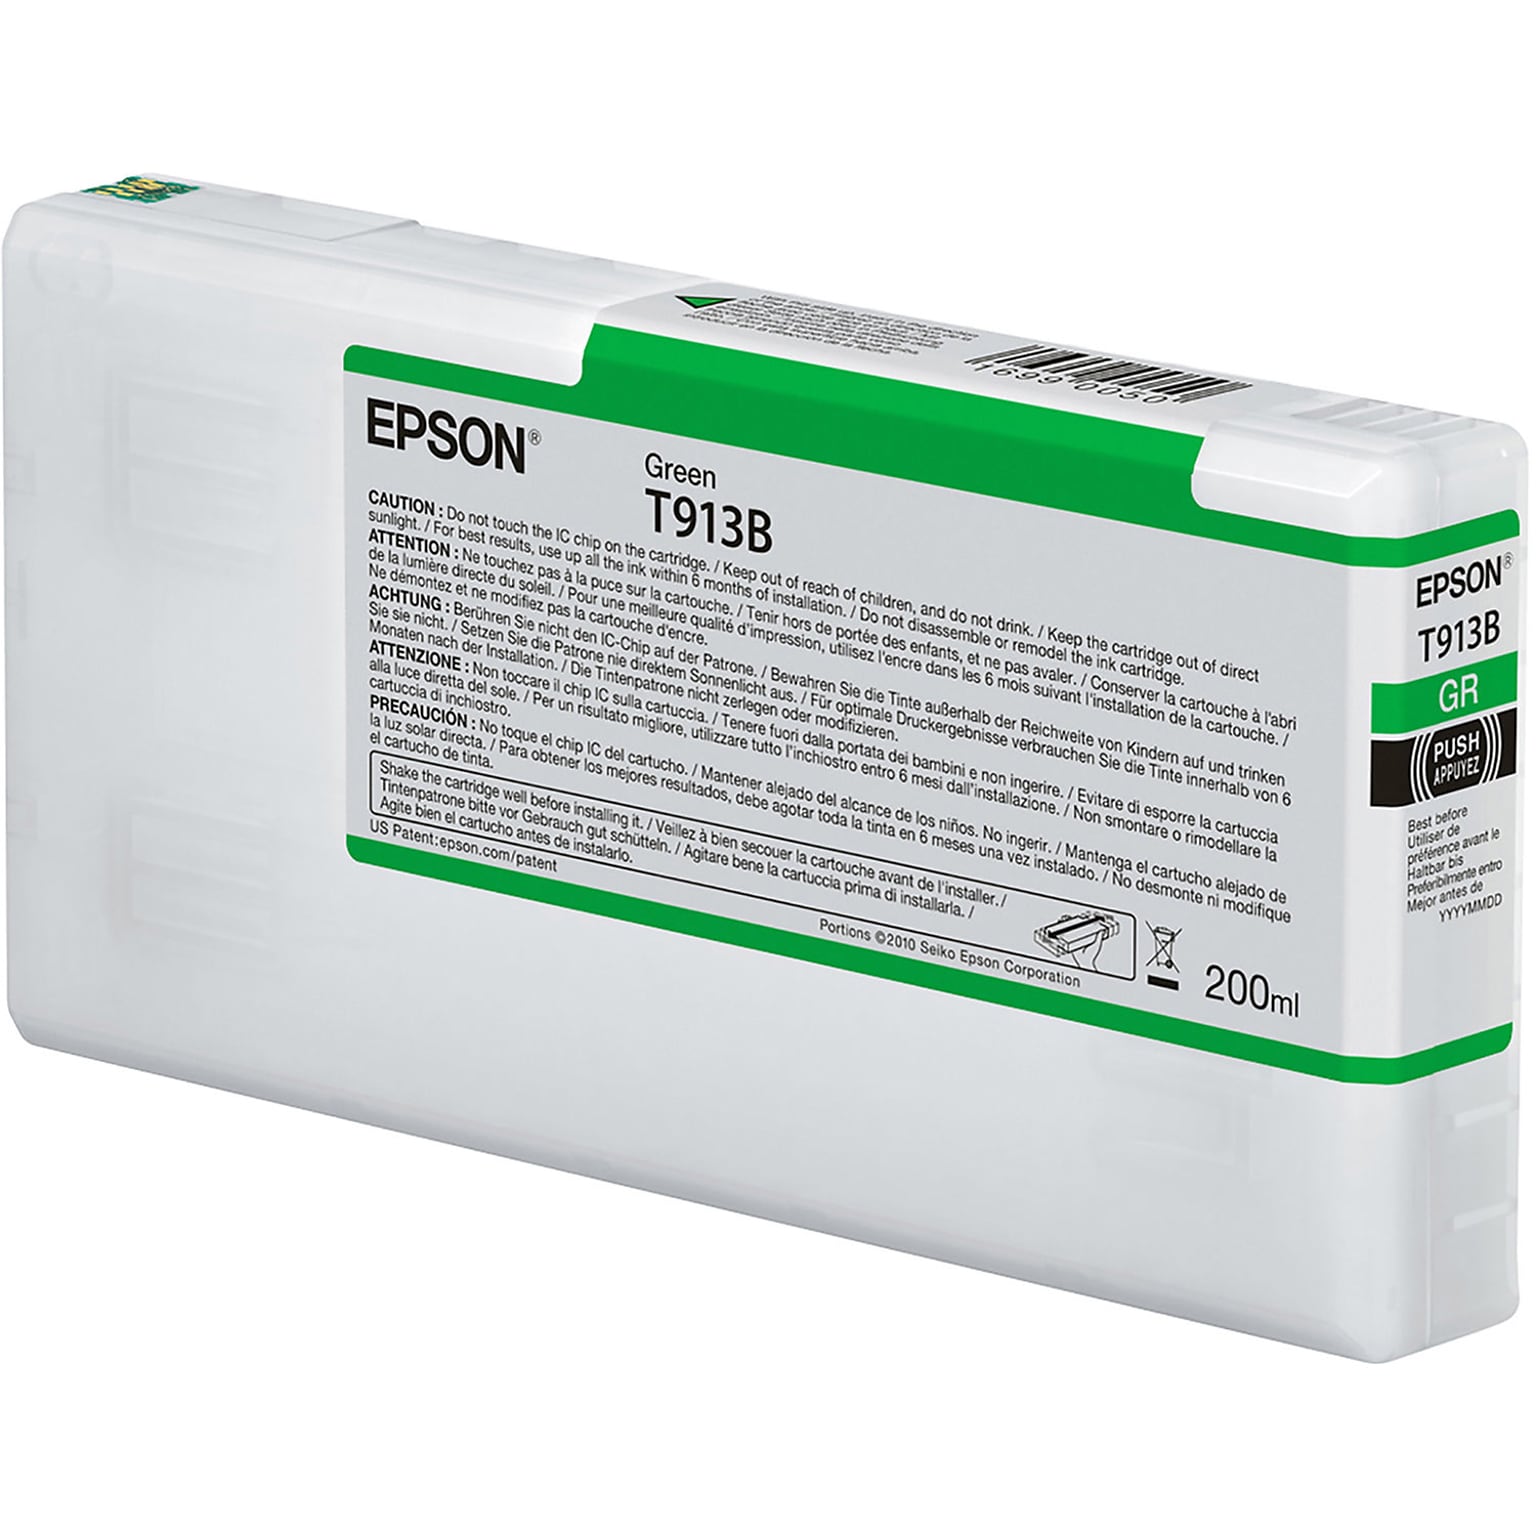 Epson T913B00 Green Standard Yield Ink Cartridge